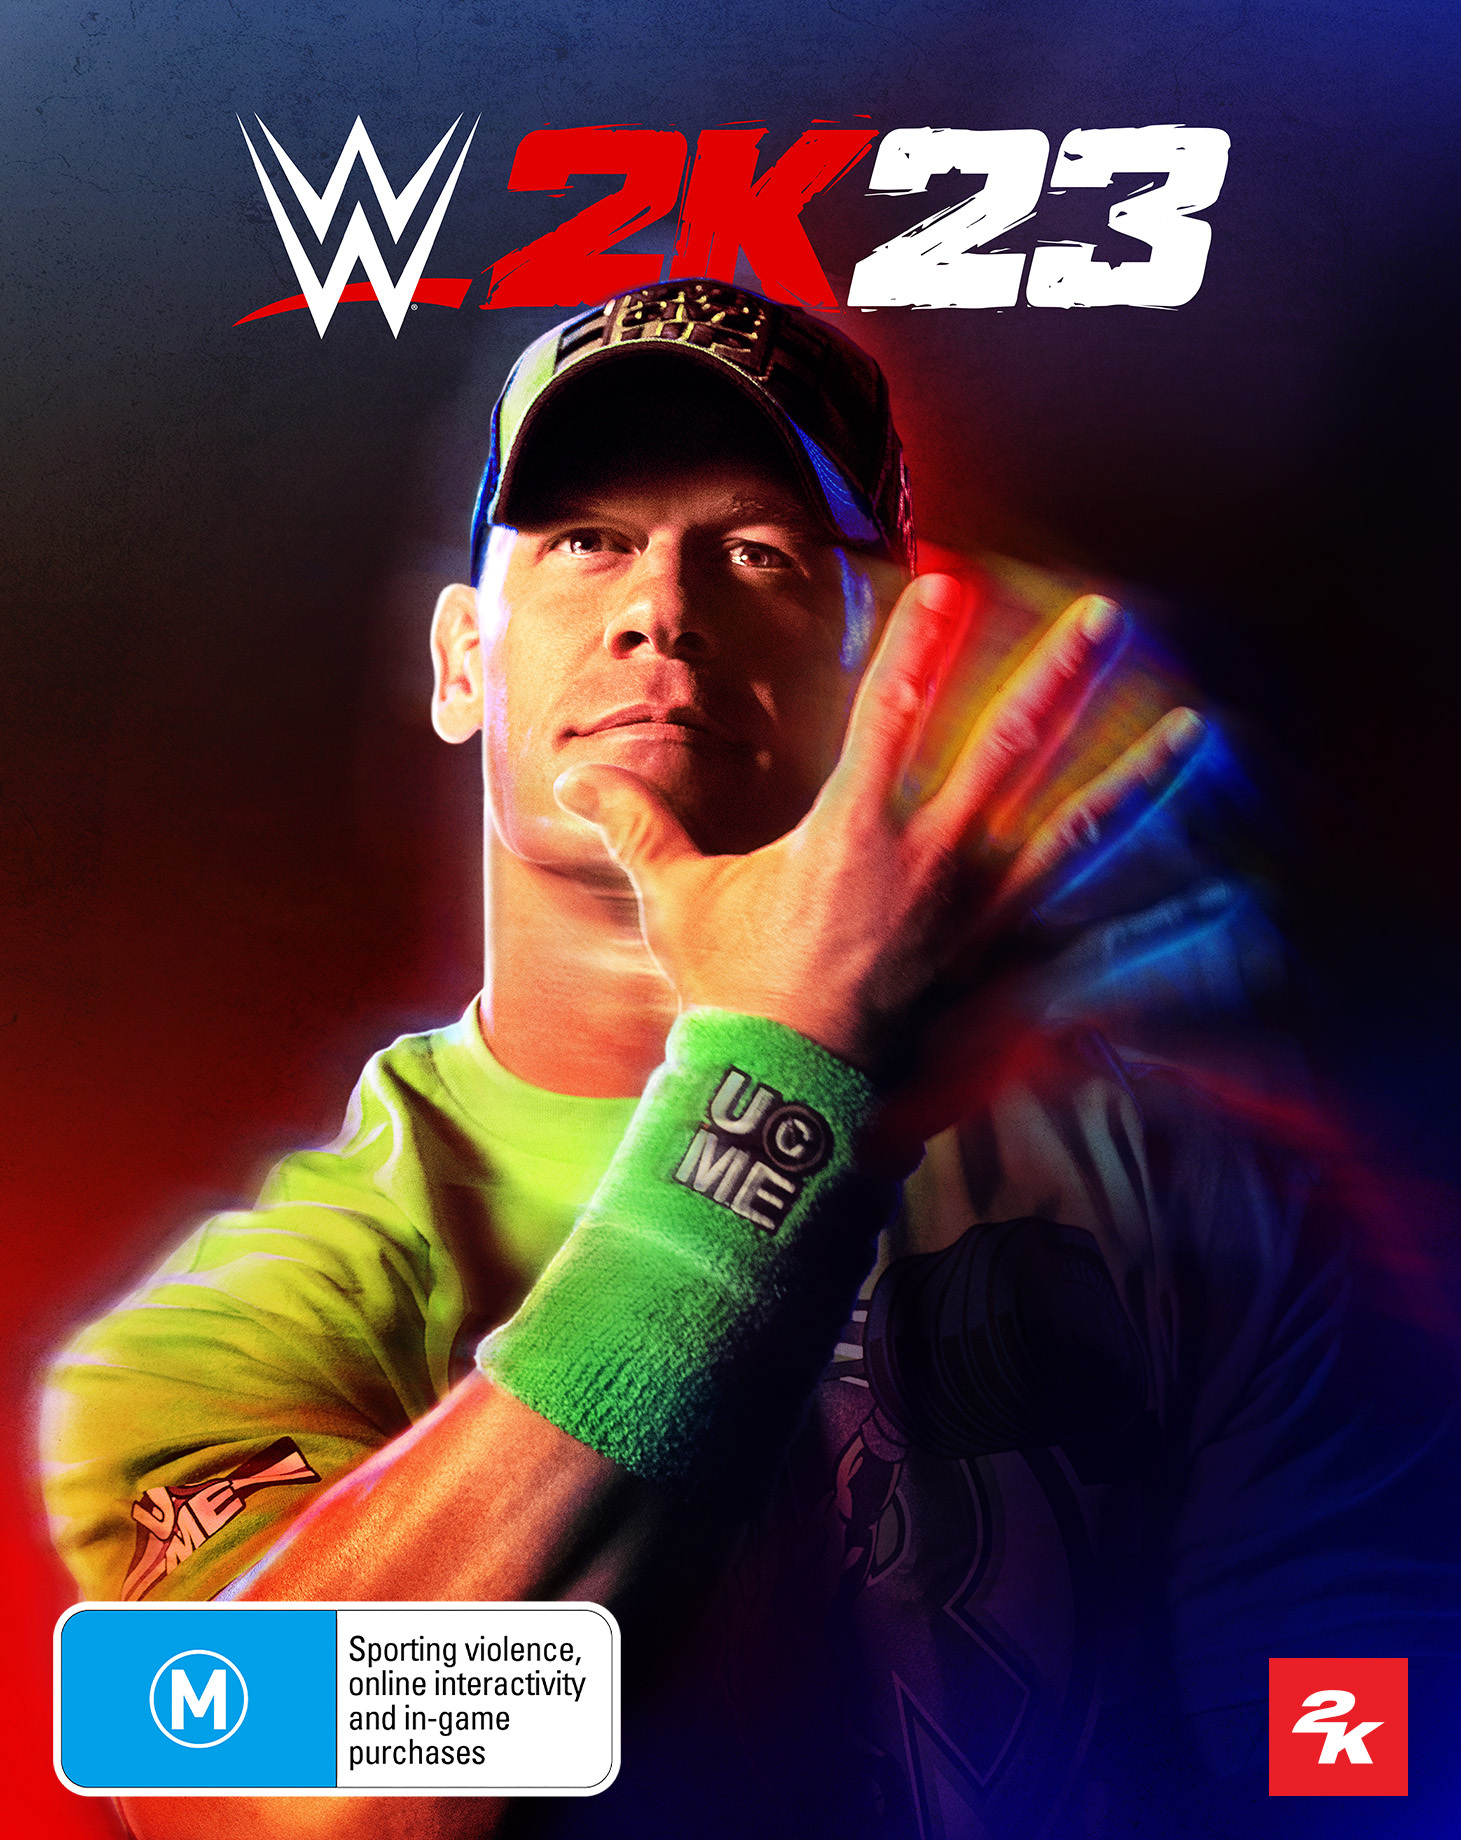 WWE 2K23 announced, John Cena as the cover star